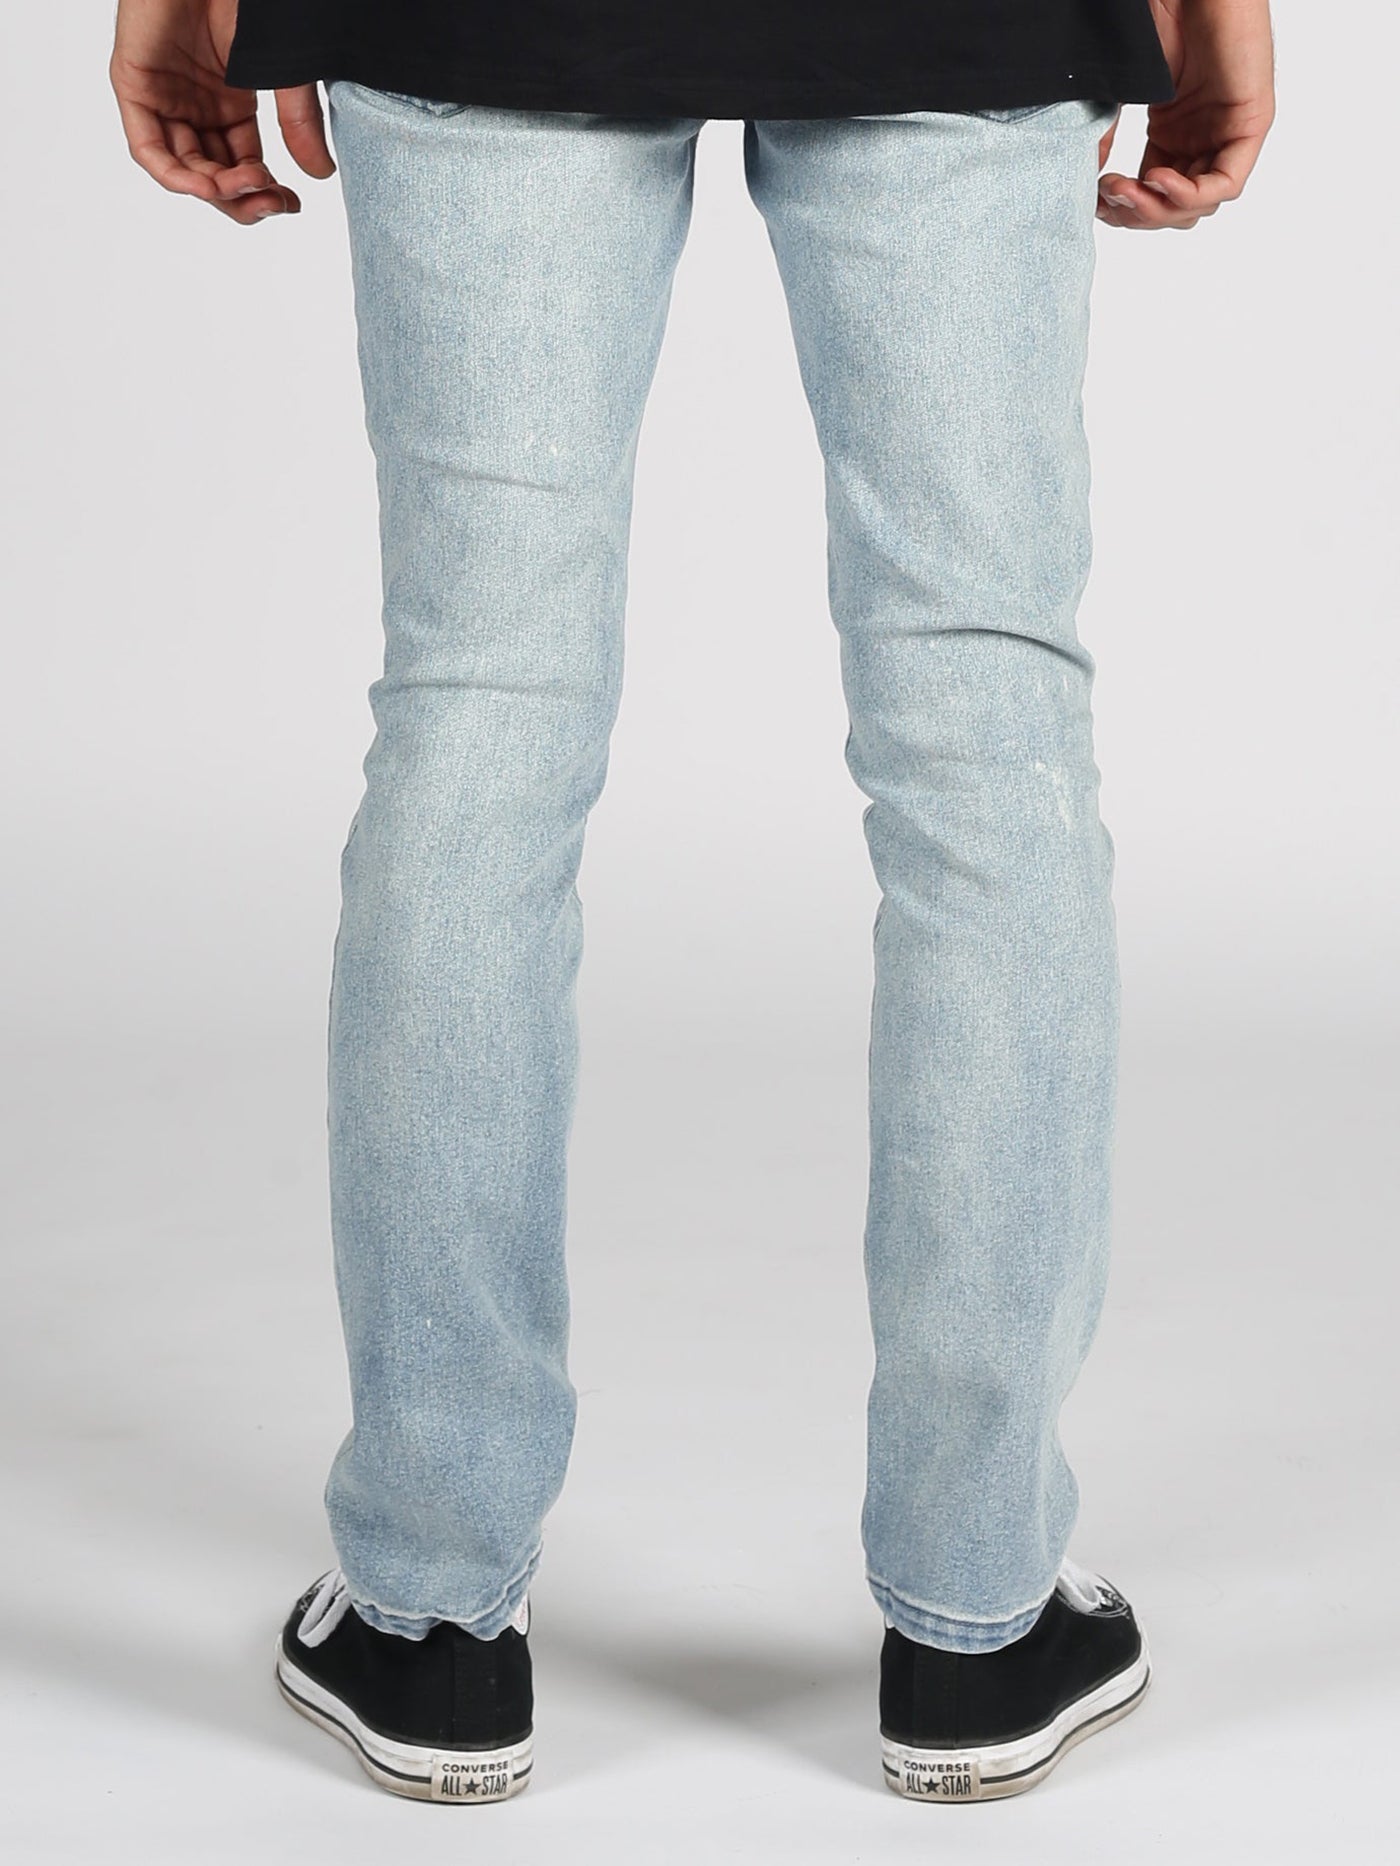 Lira Newport Denim Jeans